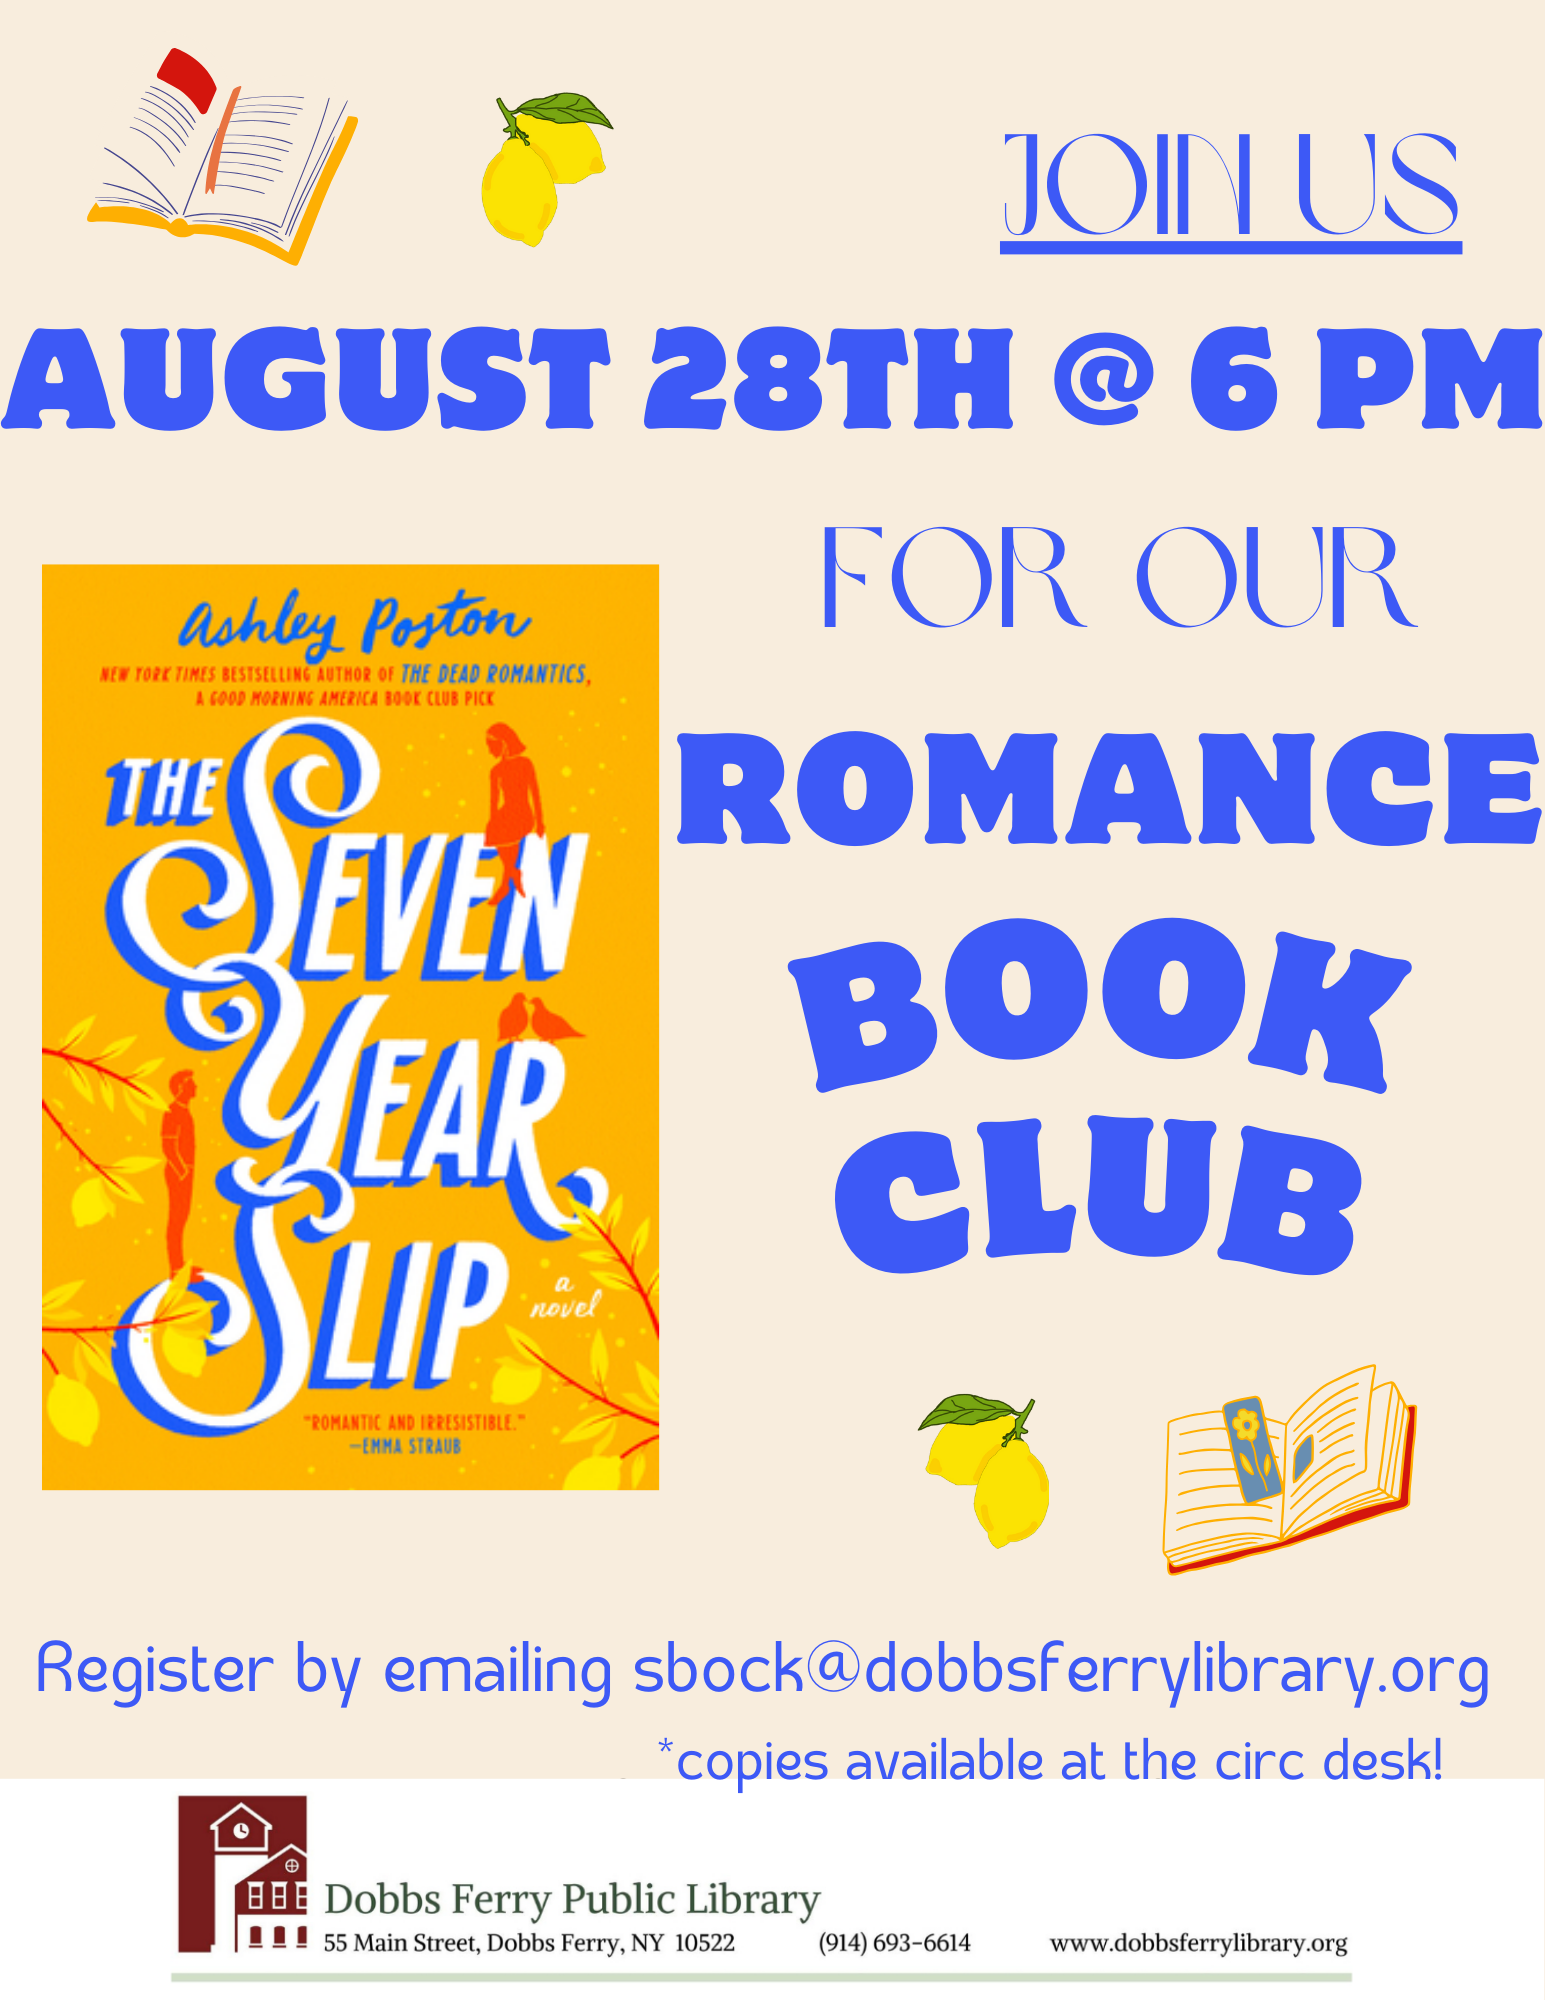 Romance Book Club: "The Seven Year Slip" (Registration)